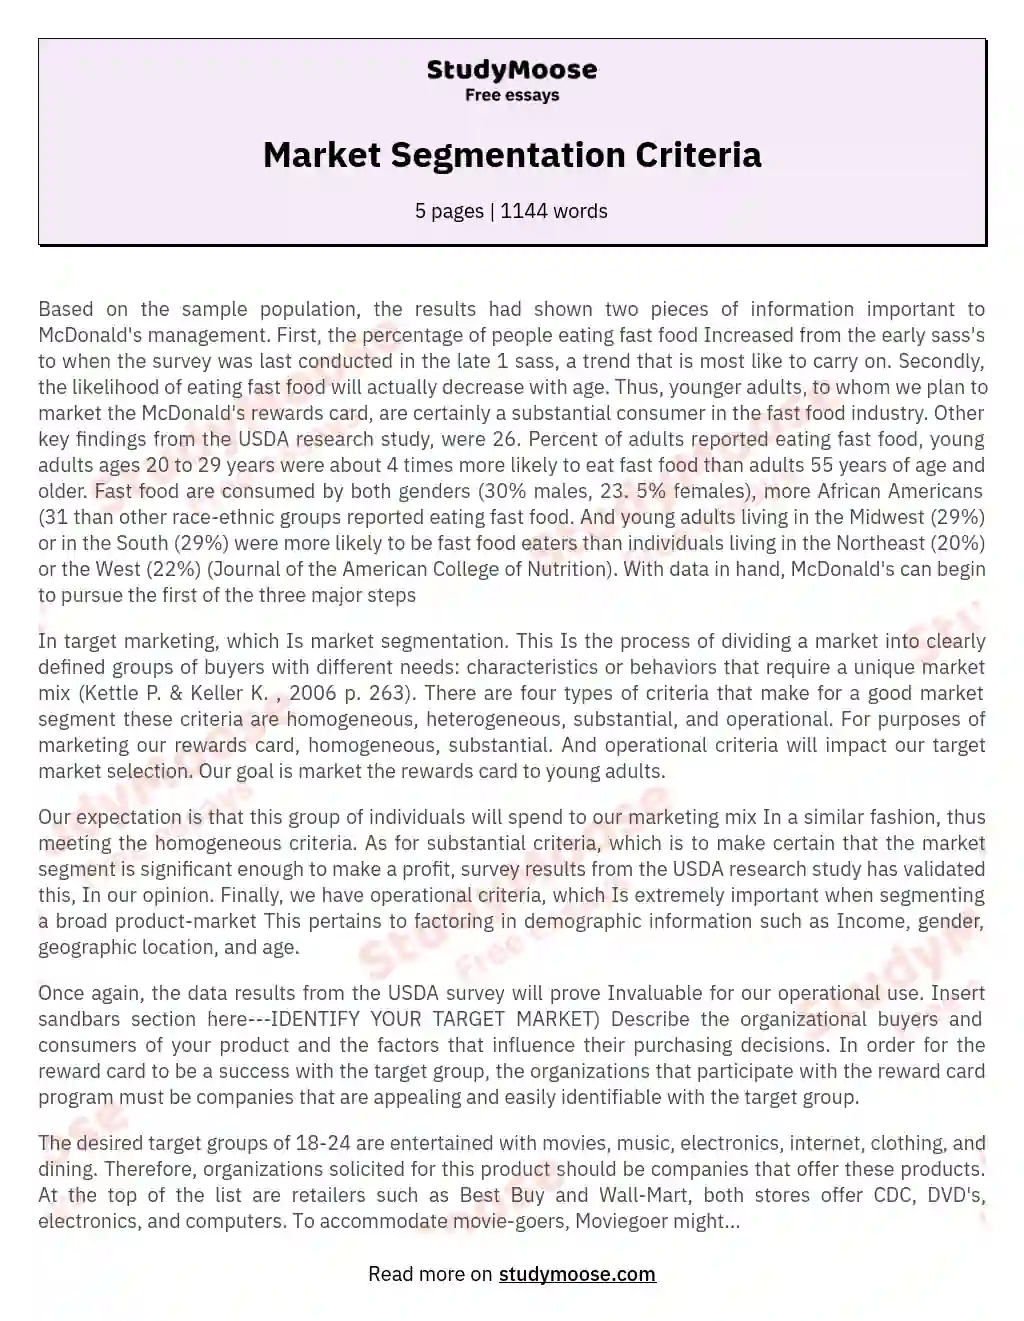 Market Segmentation Criteria essay